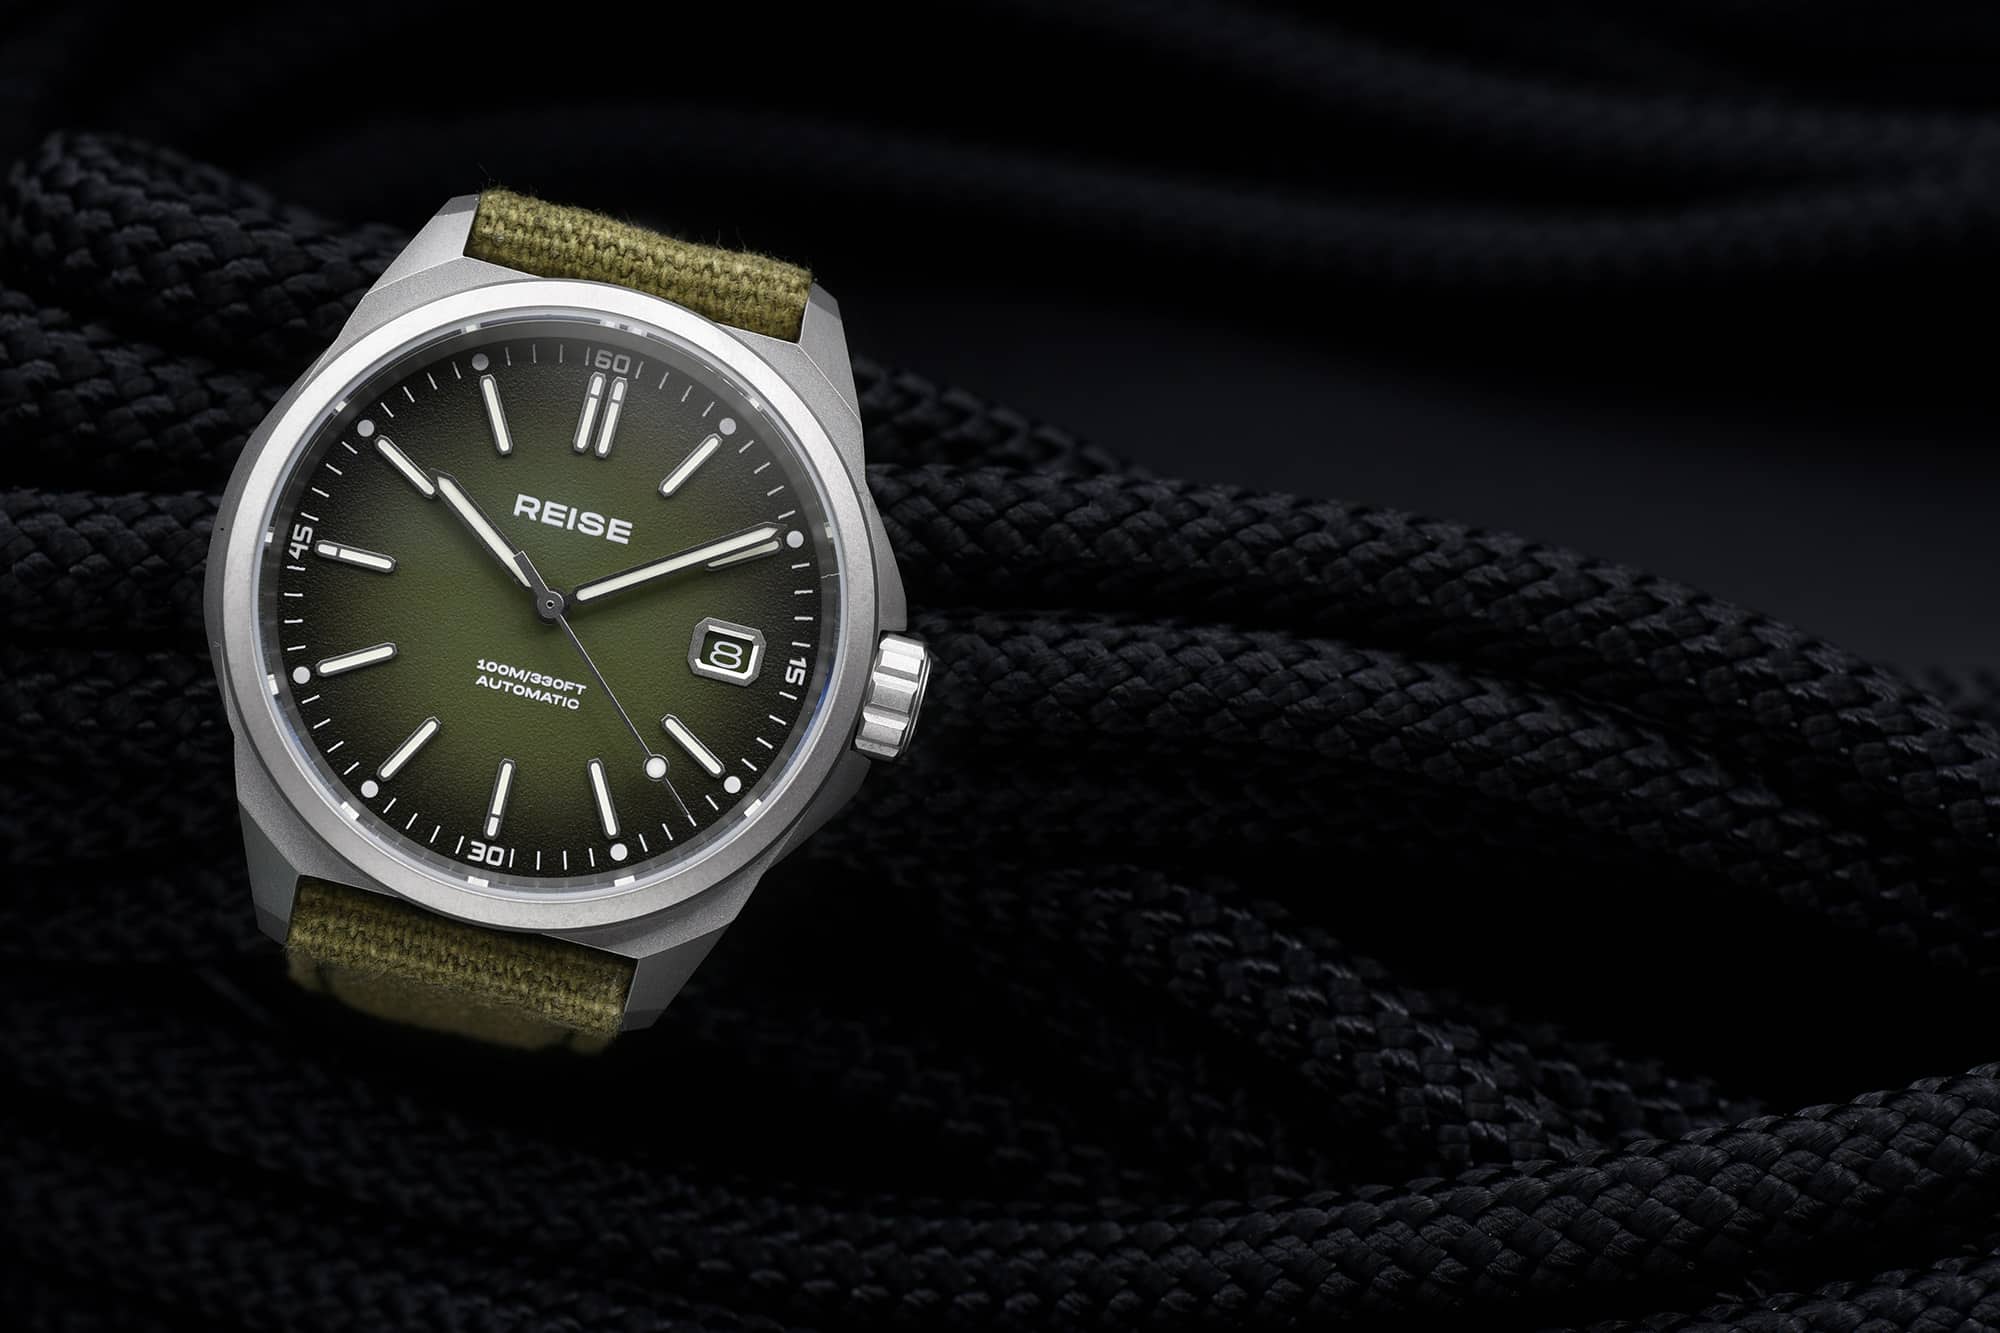 Reise brand's Resolute watch (Titanium)